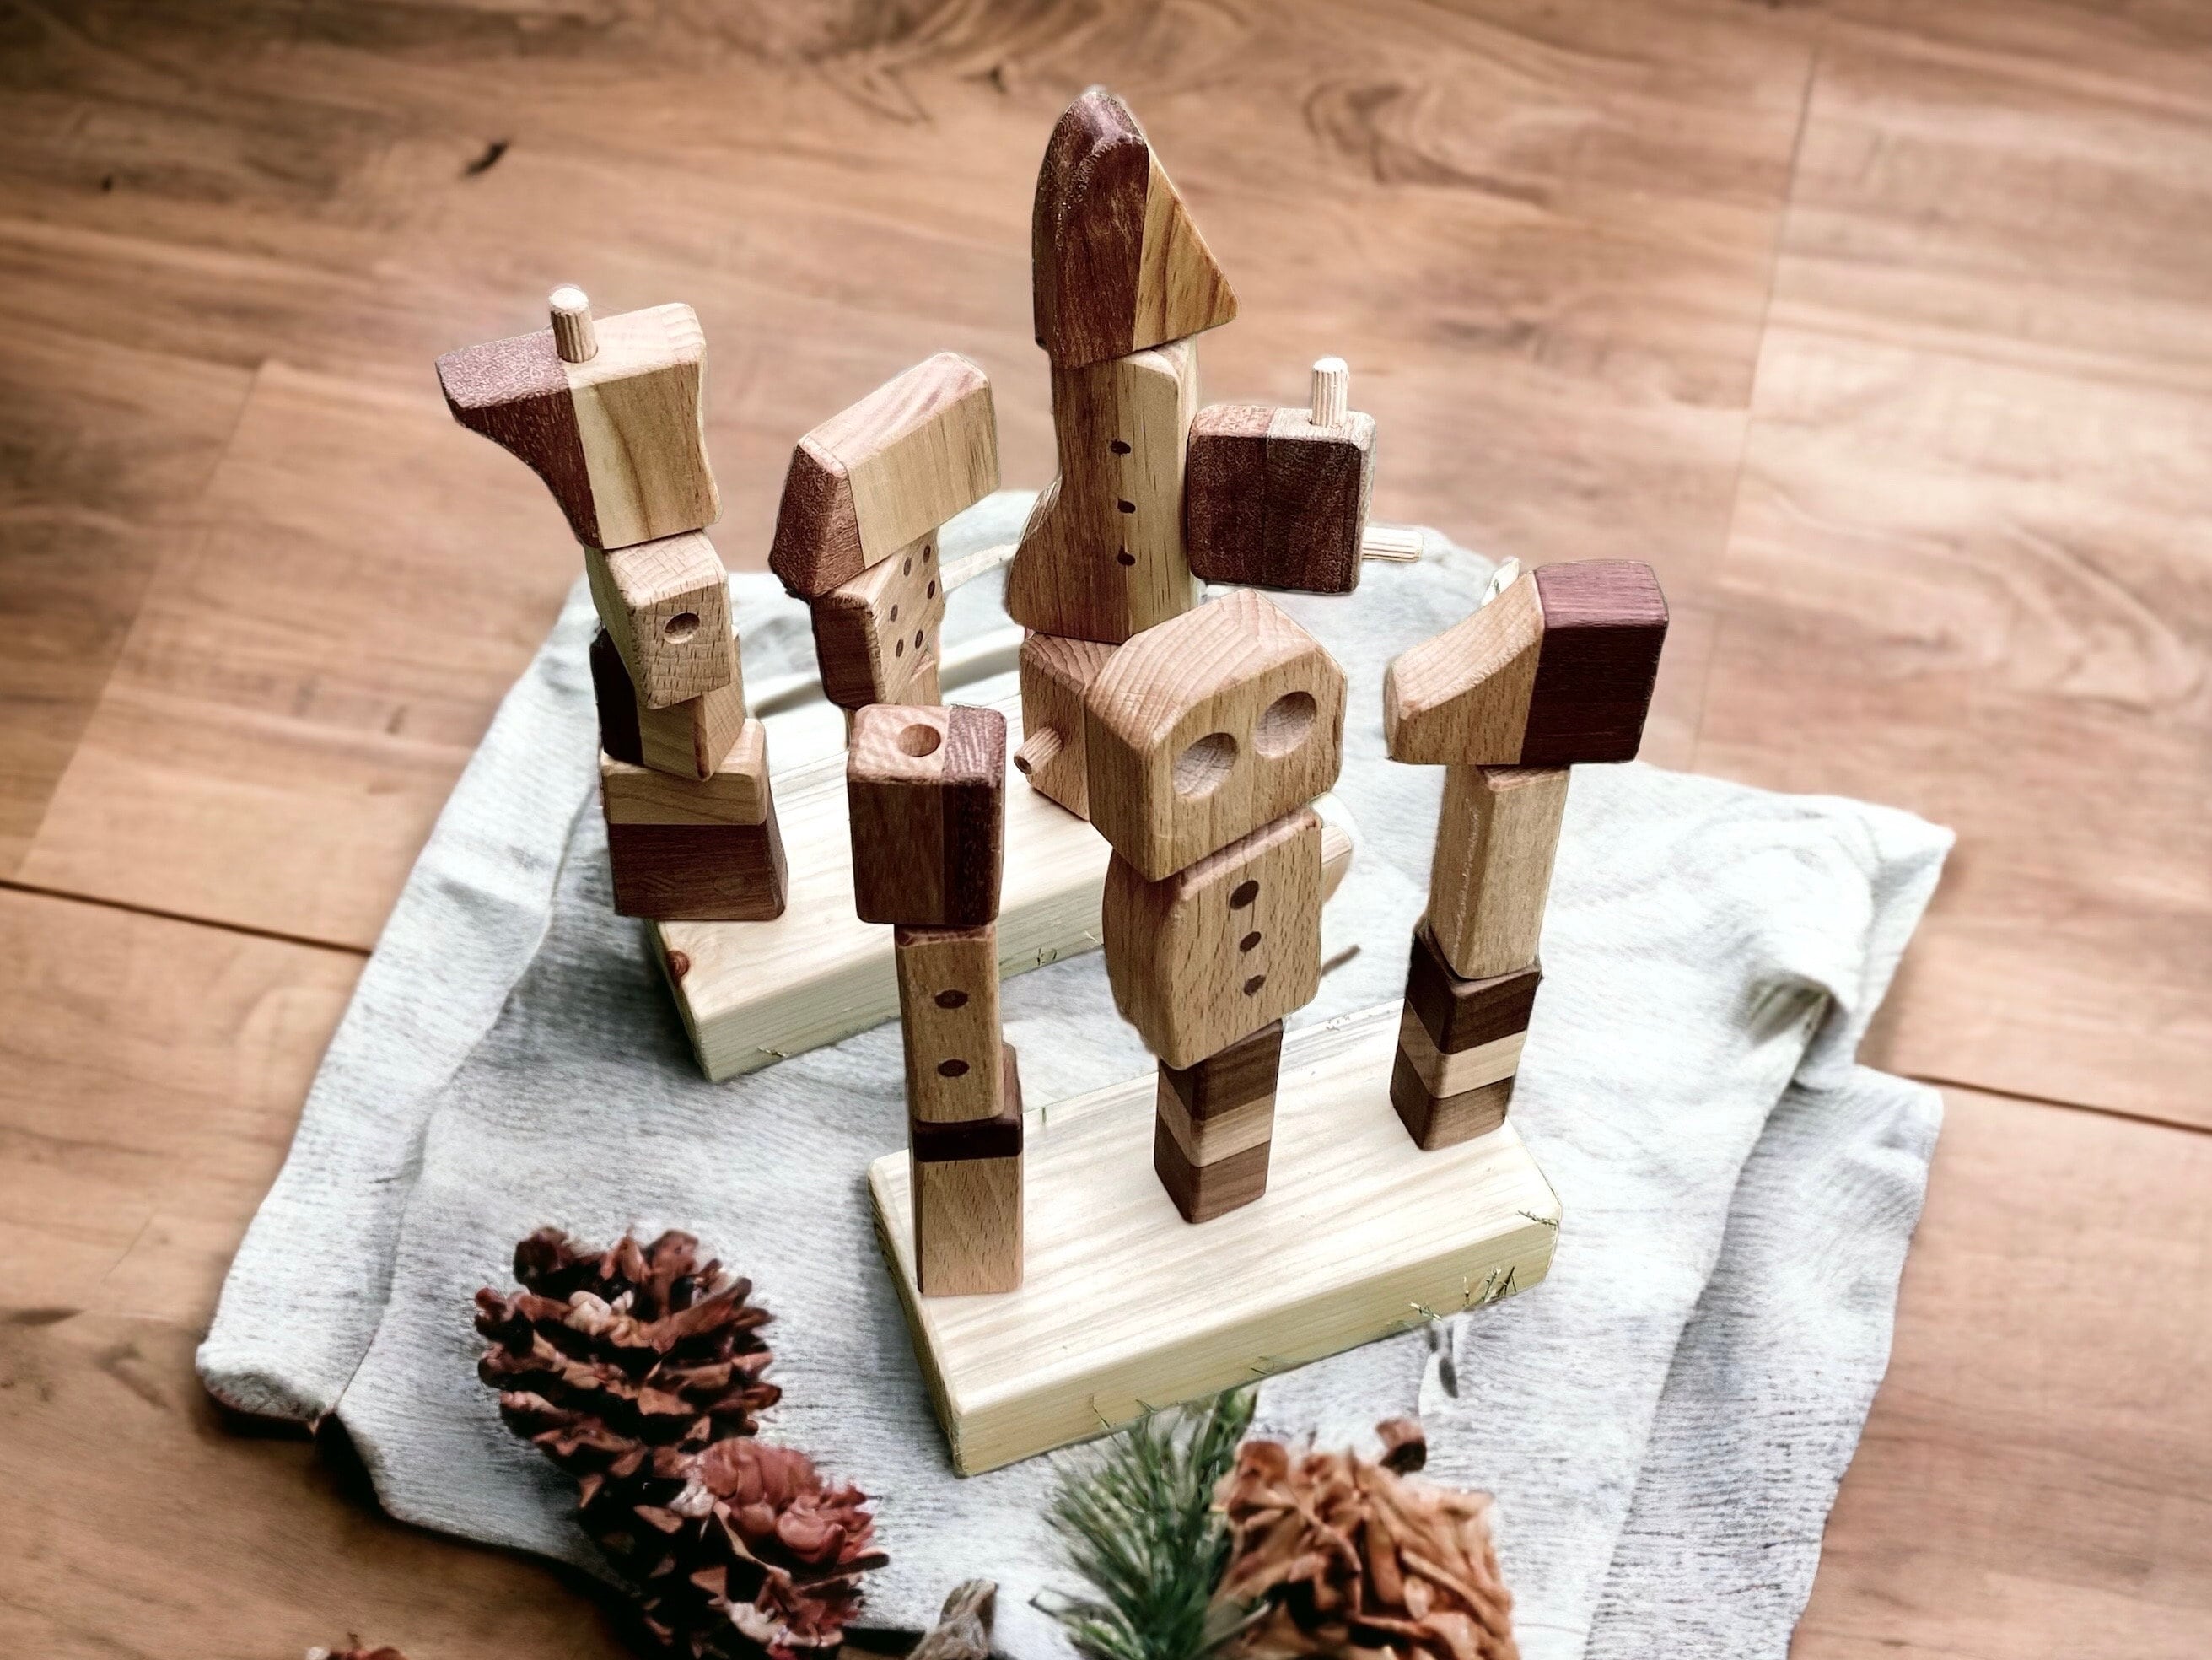 Handmade Wooden Blocks for Endless Play